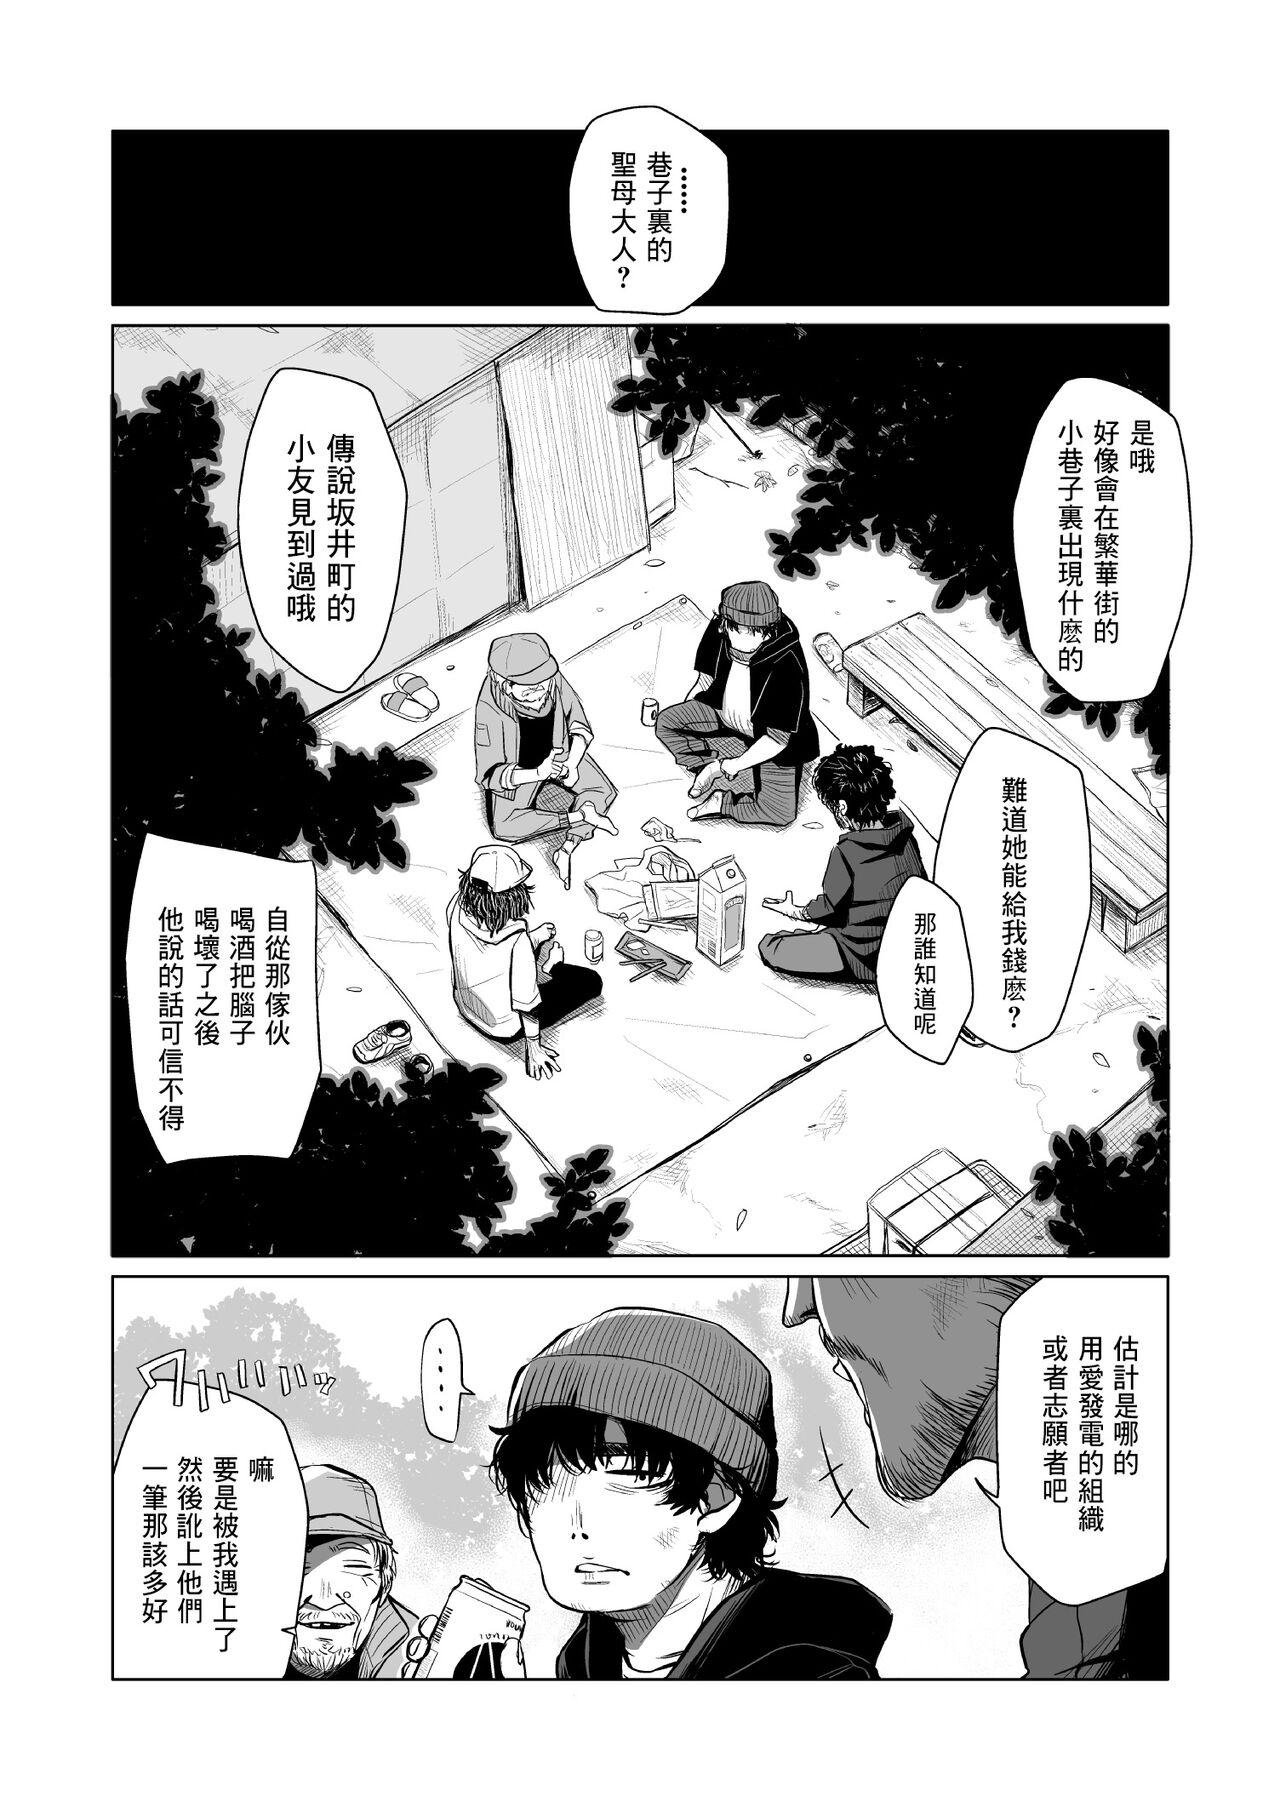 Massive Enji no Rinjin o Aiseyo - Original Picked Up - Page 4